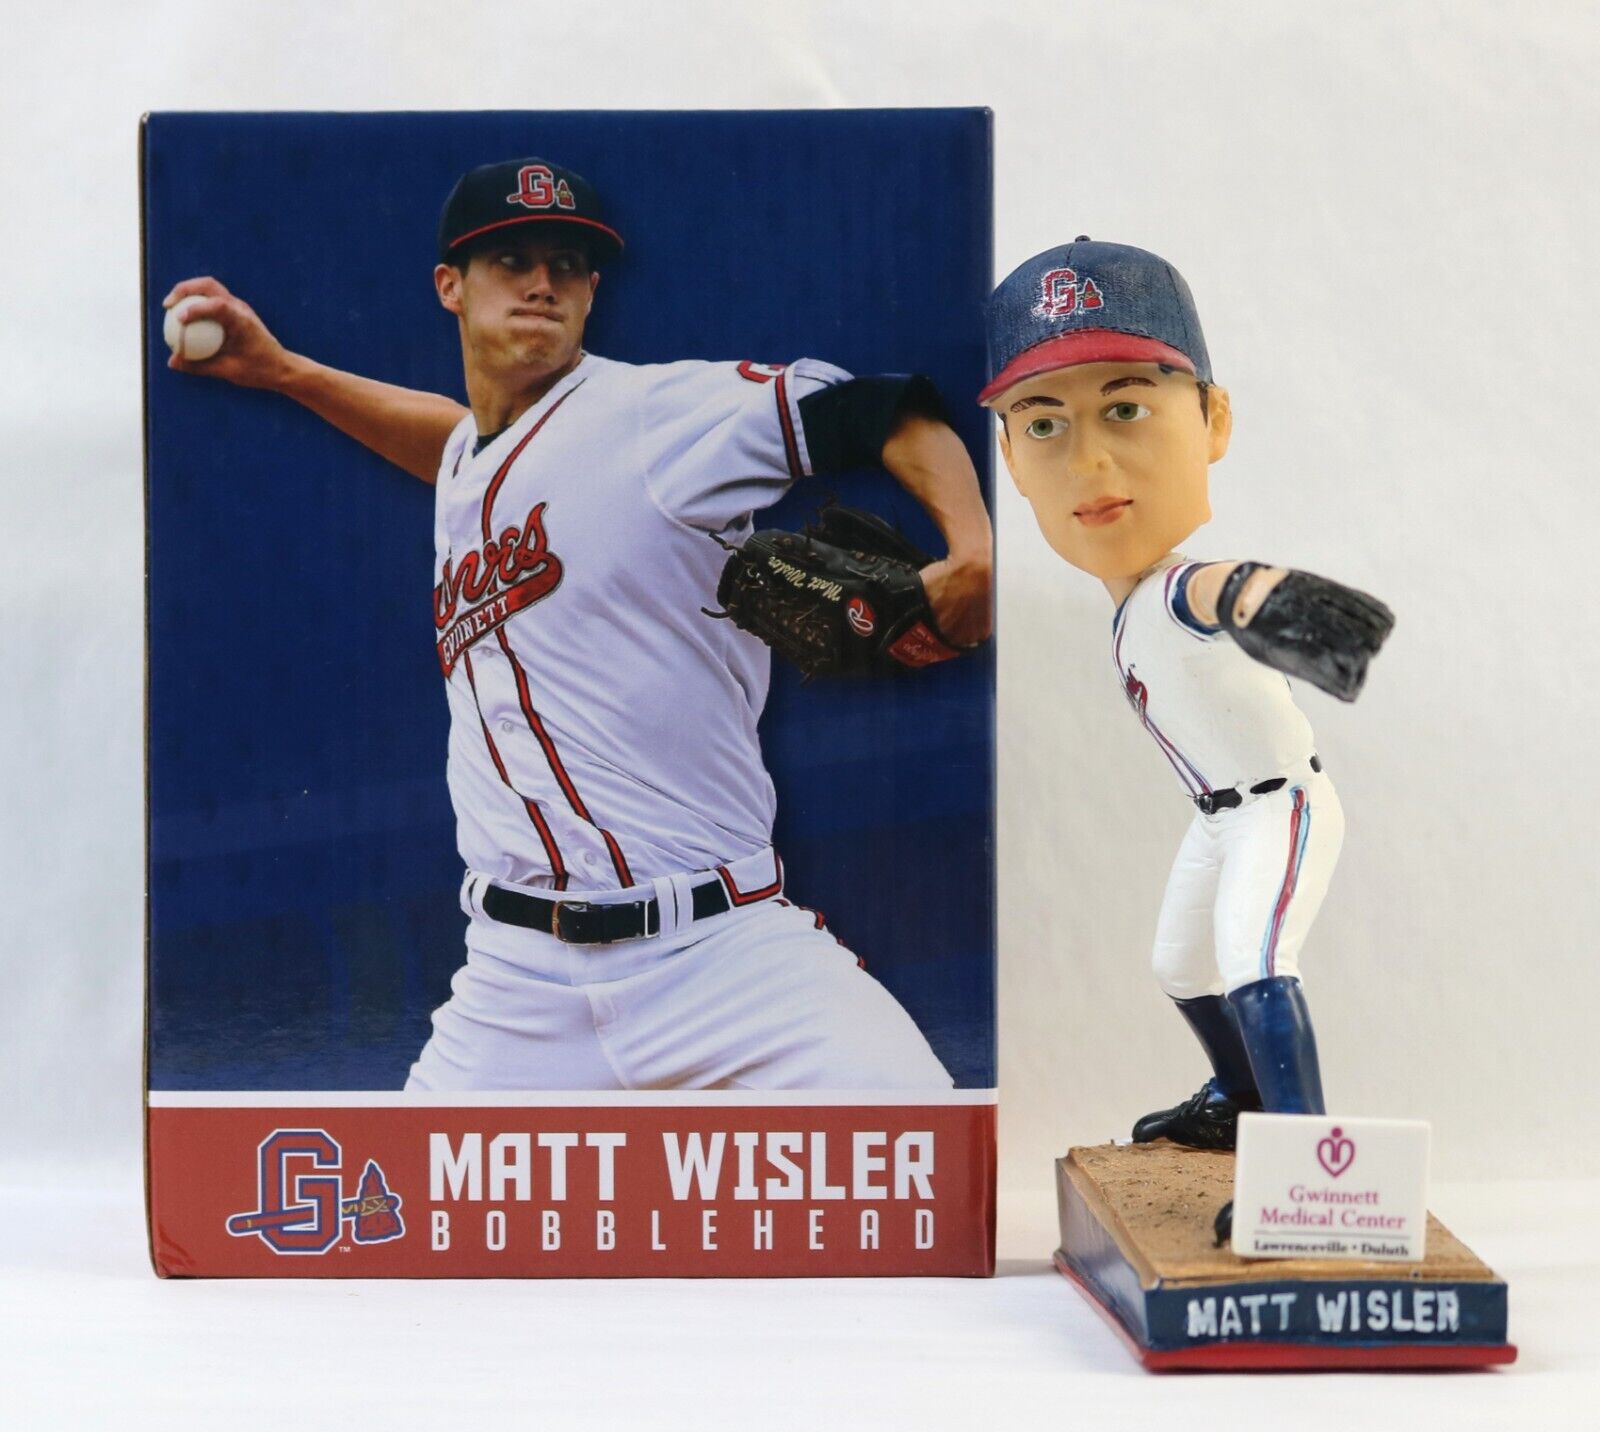 2015 Gwinnett Braves Atlanta Pitcher ▪ Matt Wisler ▪ BobbleHead ▪ Includes Box